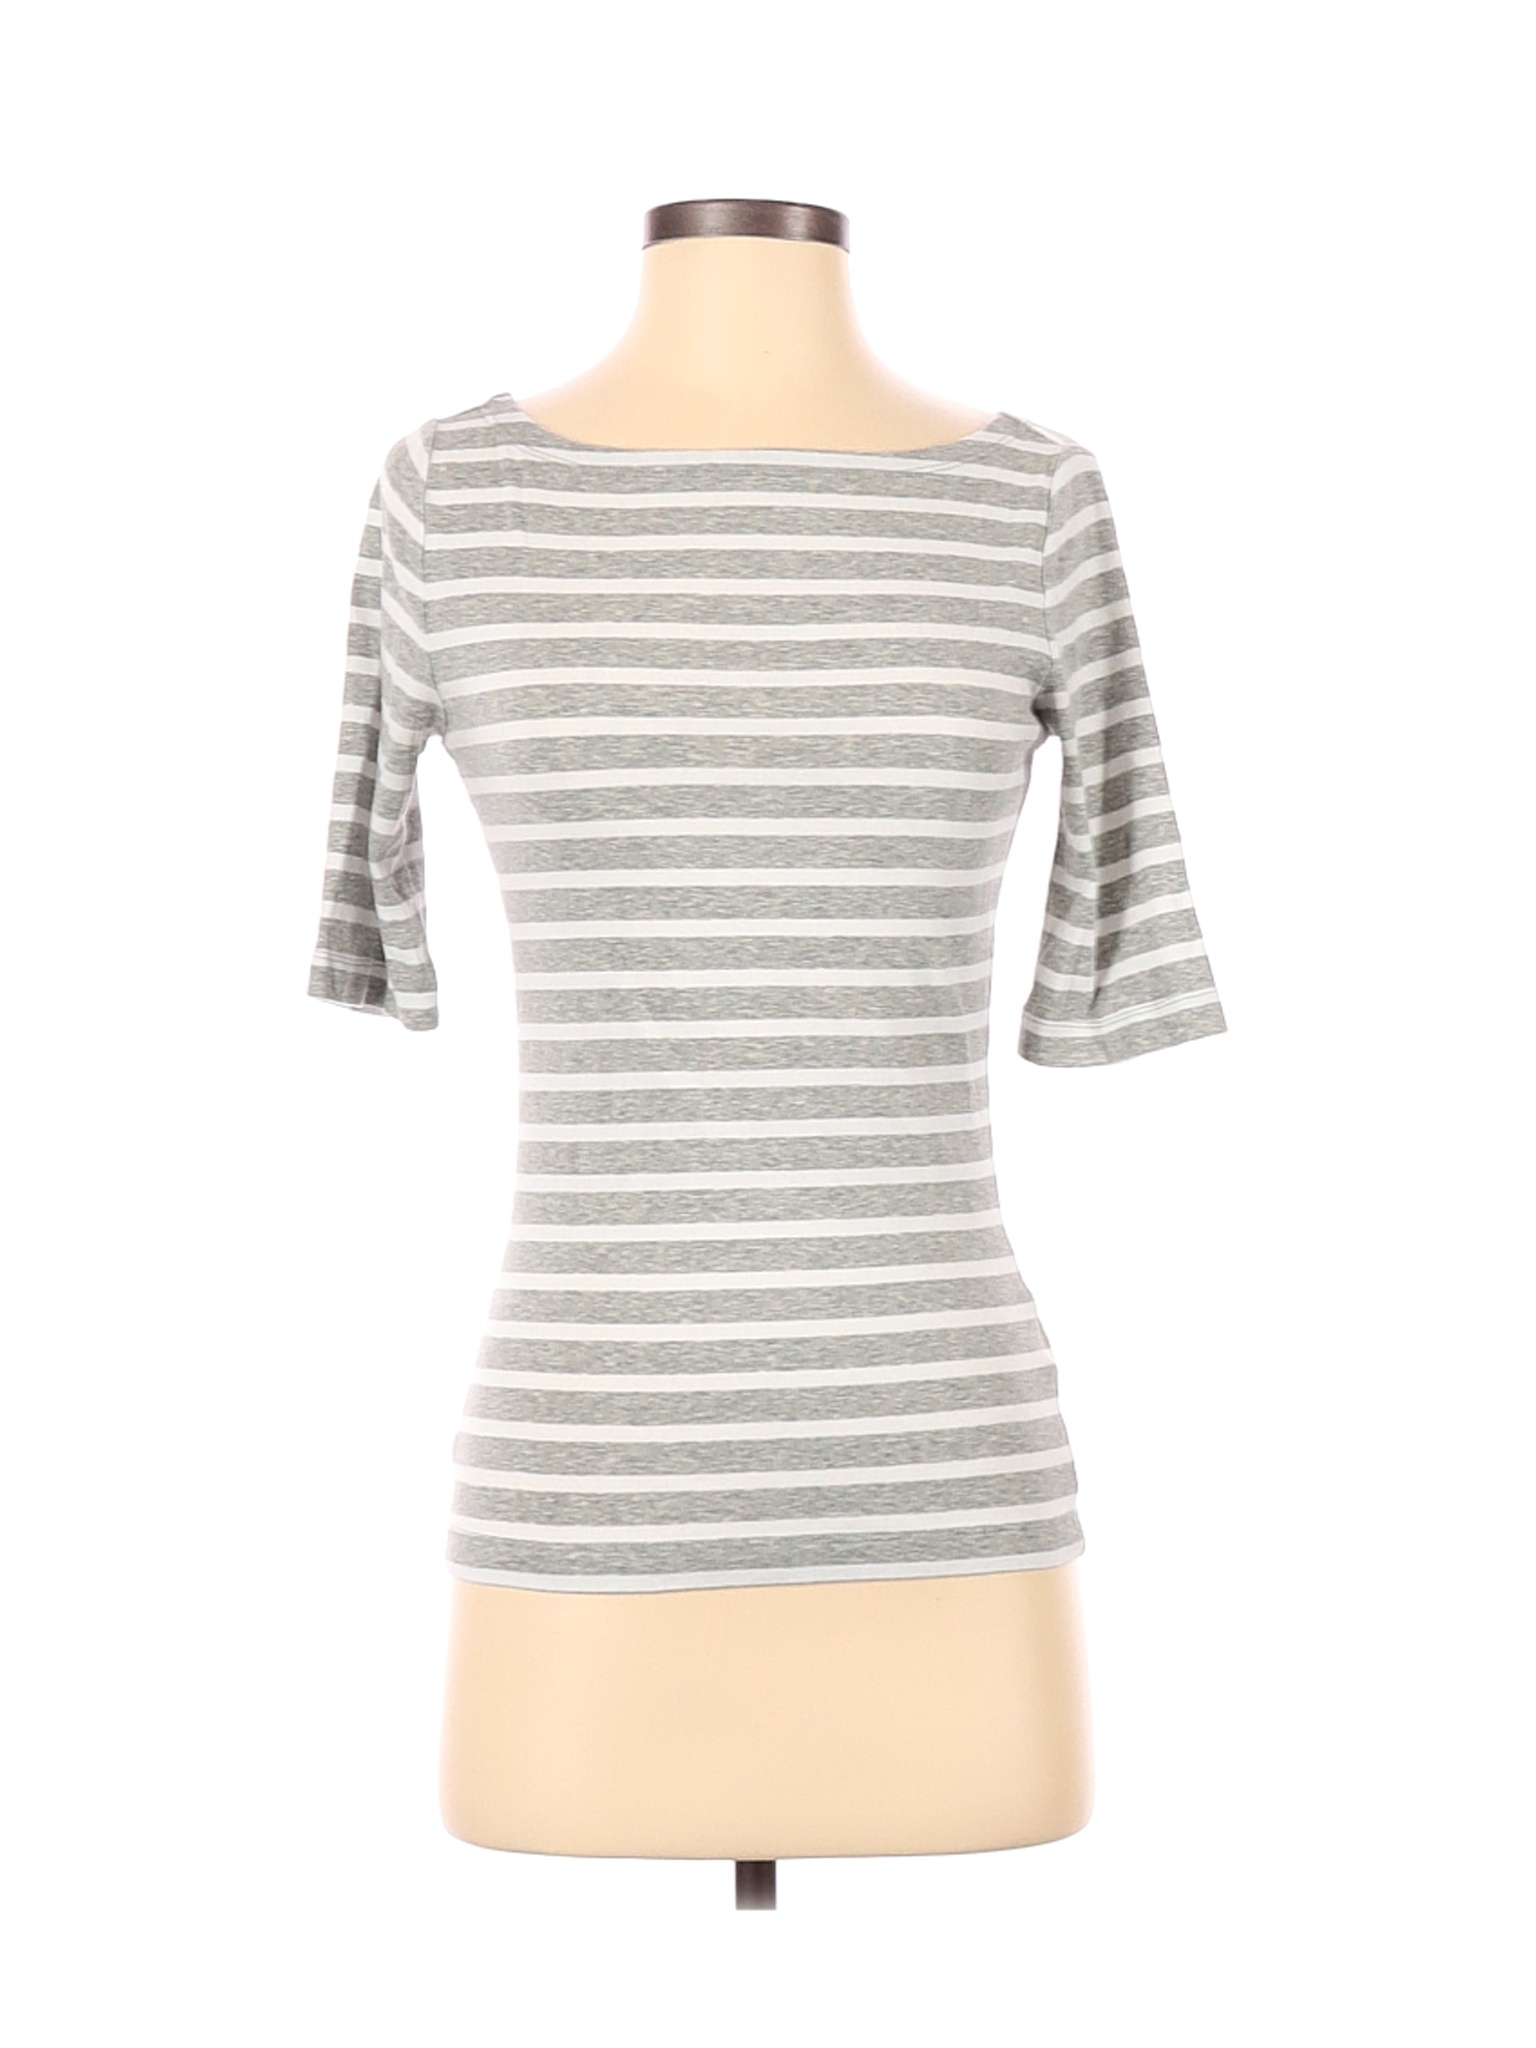 Gap Women Gray Short Sleeve T-Shirt S | eBay